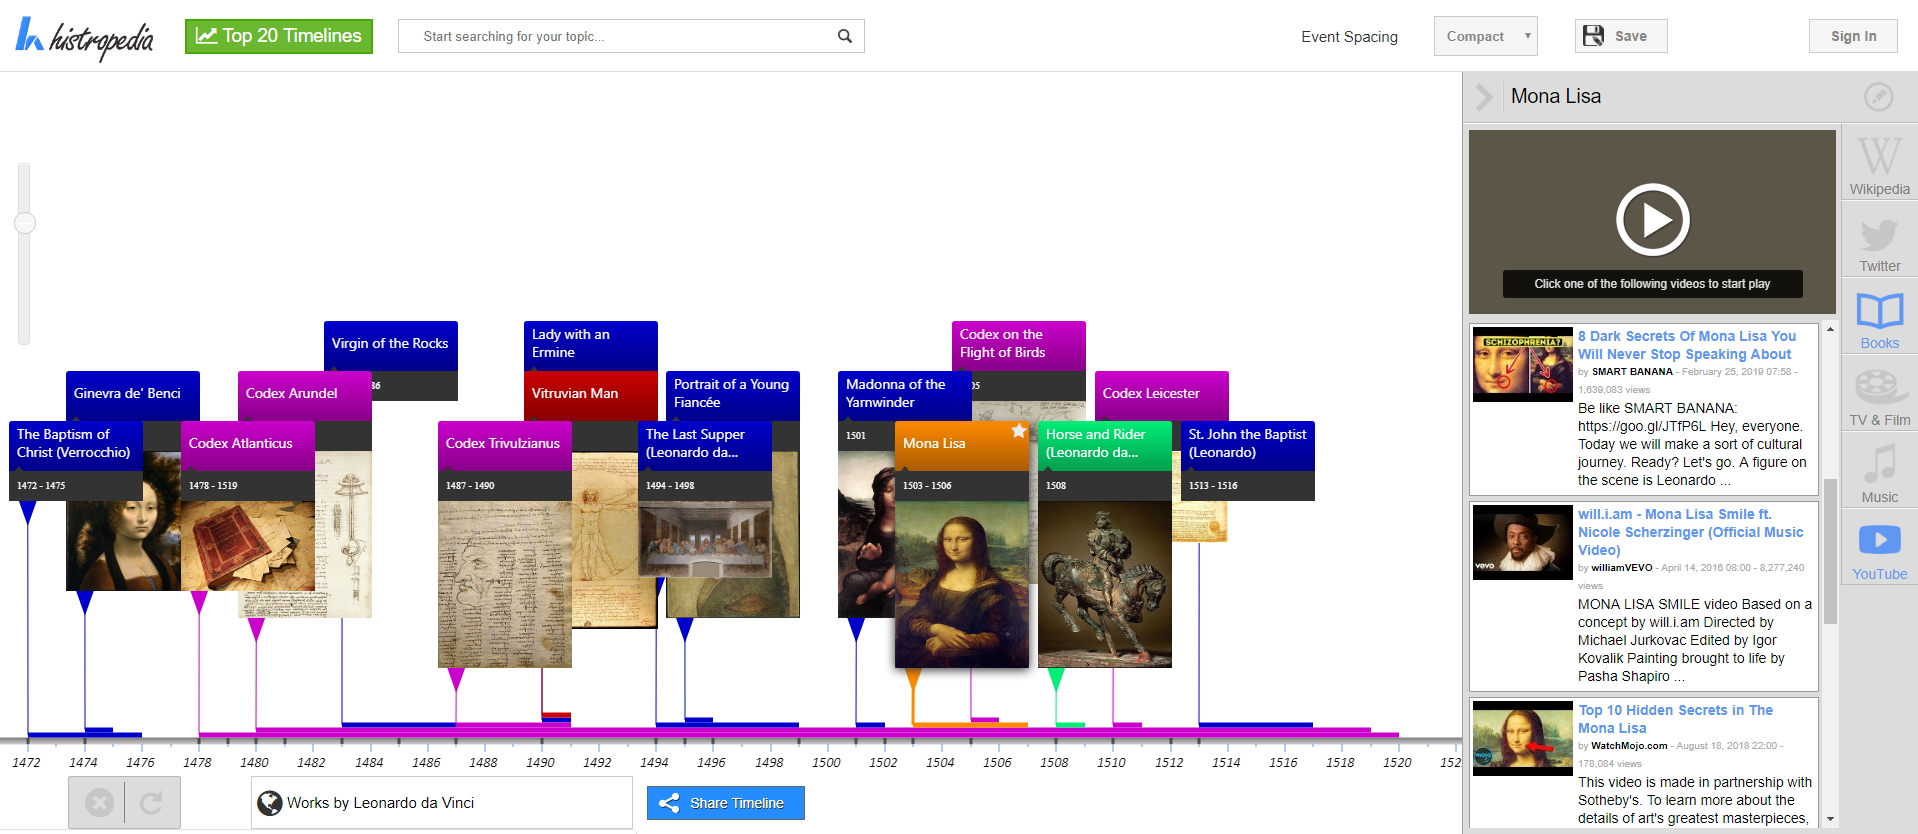 Works by Leonardo da Vinci. Timeline